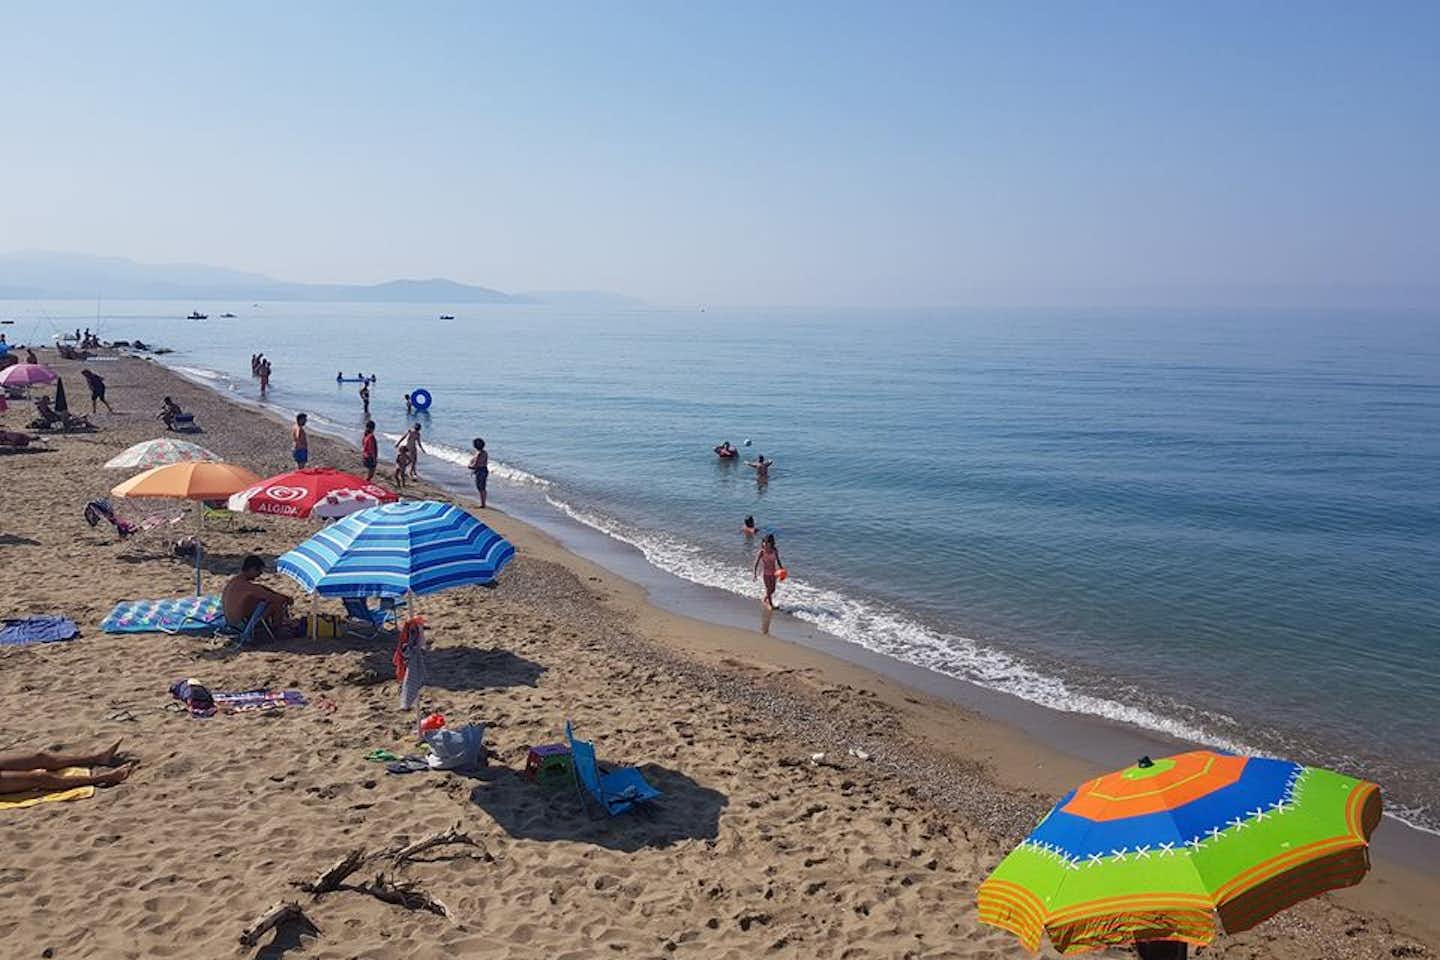 Camping La Foce dei Tramonti - Strand am Mittelmeer in der Nähe des Campinplätzes